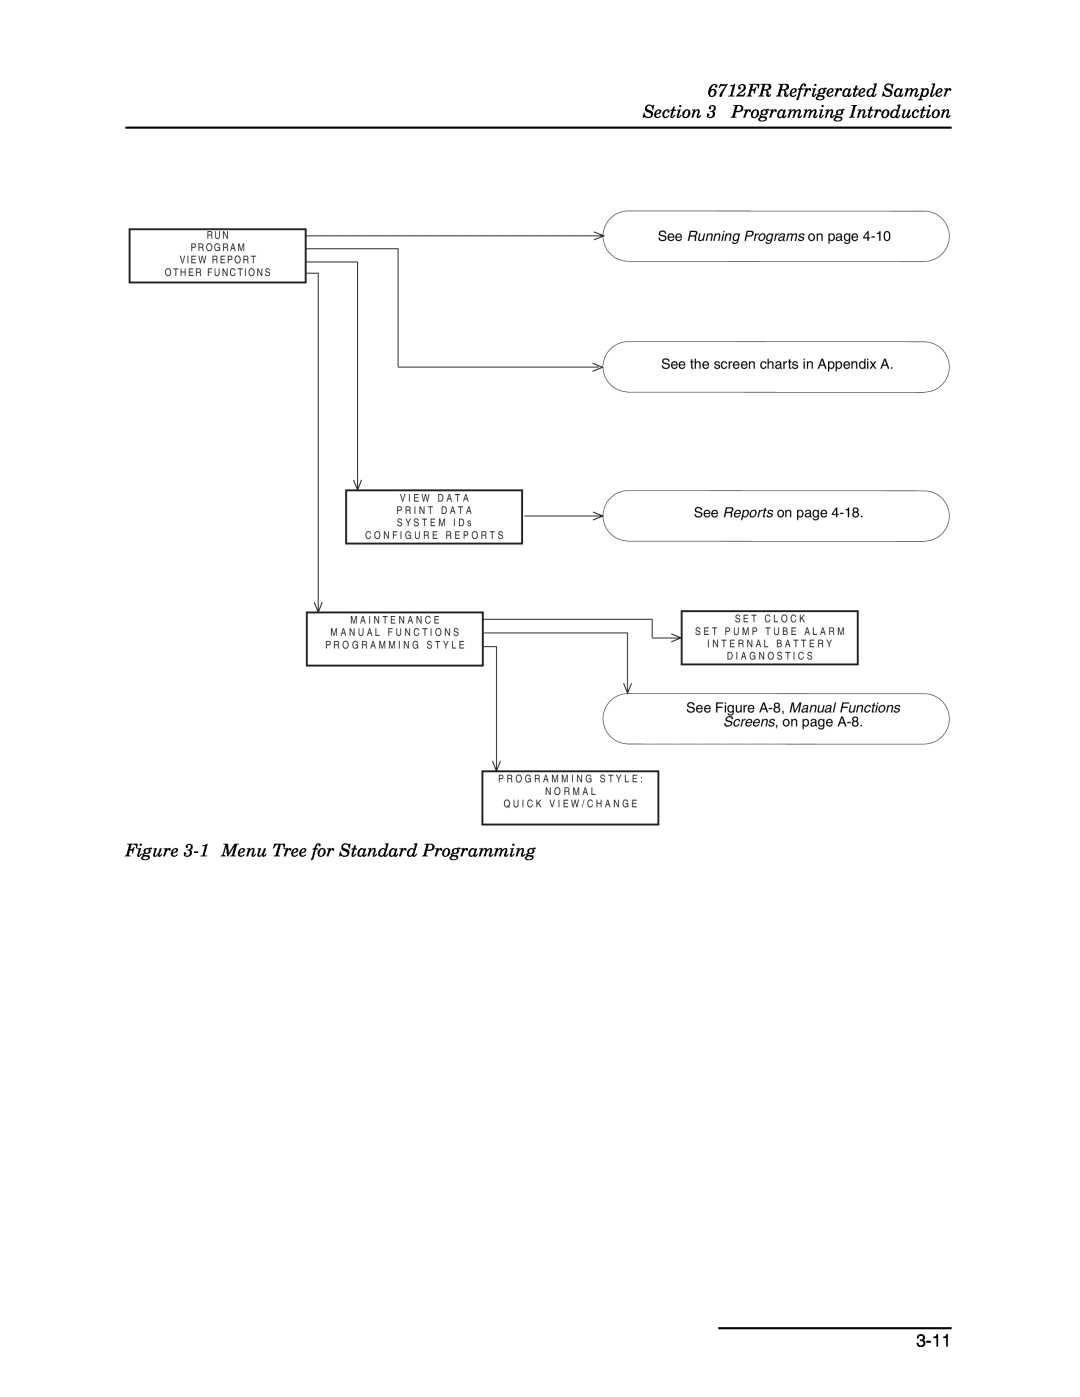 Teledyne manual 6712FR Refrigerated Sampler Programming Introduction, 1 Menu Tree for Standard Programming, 3-11 